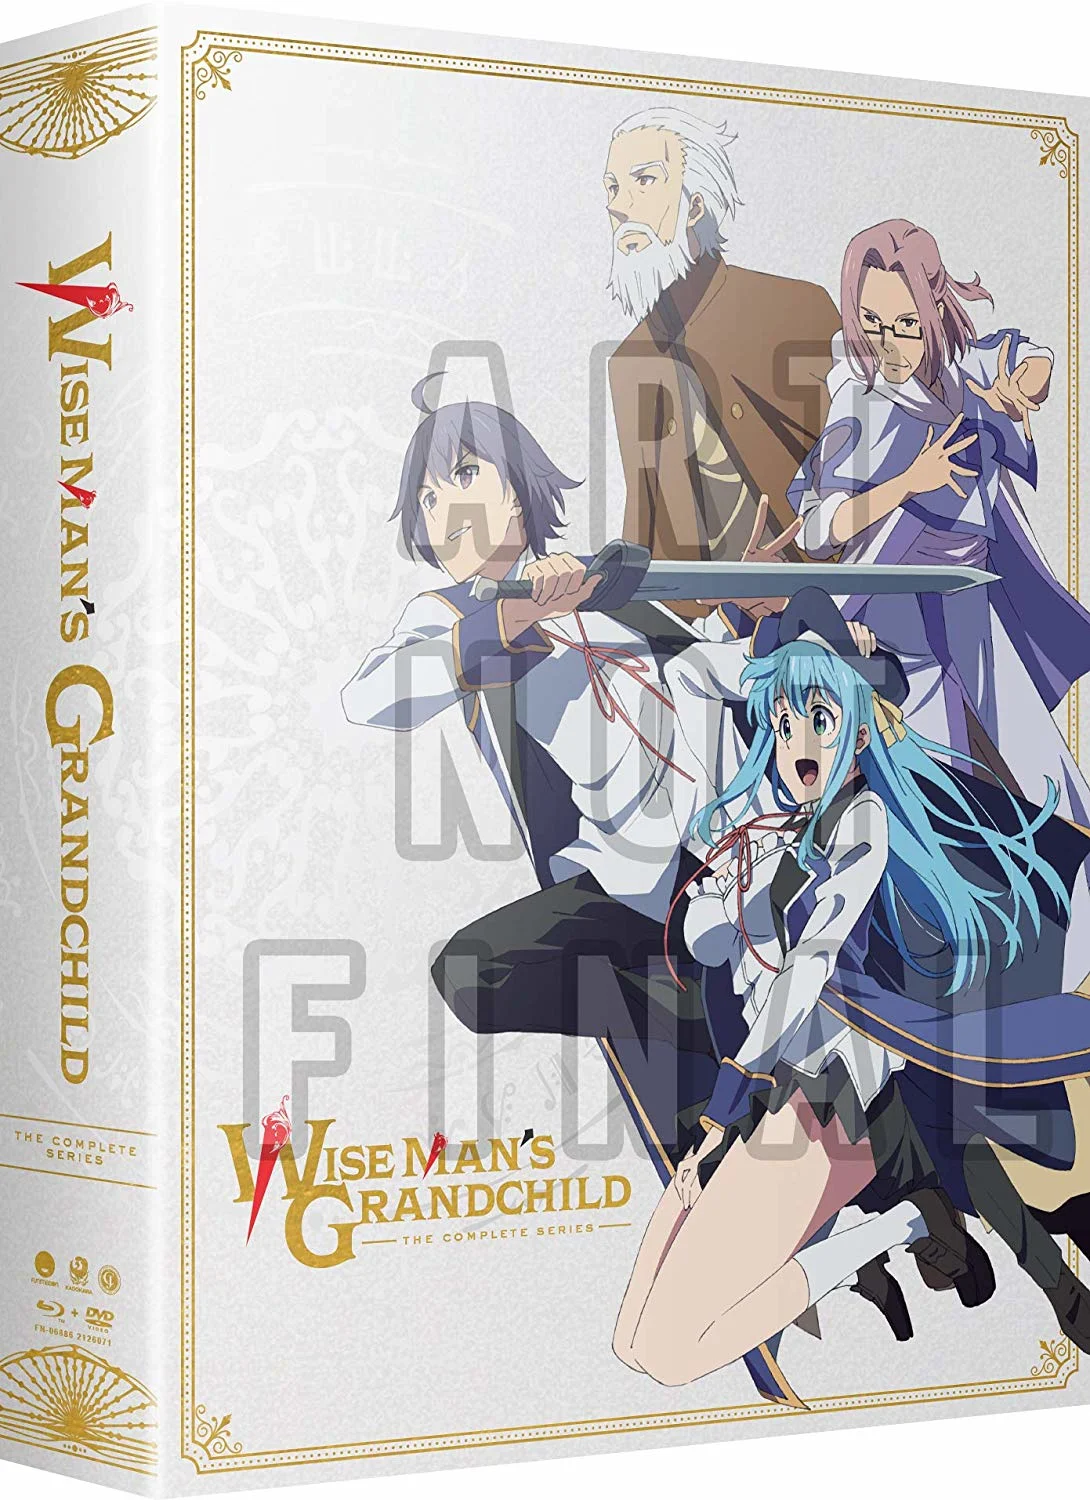 Wise Man’s Grandchild – Complete Series – Ltd Edition (Combo)